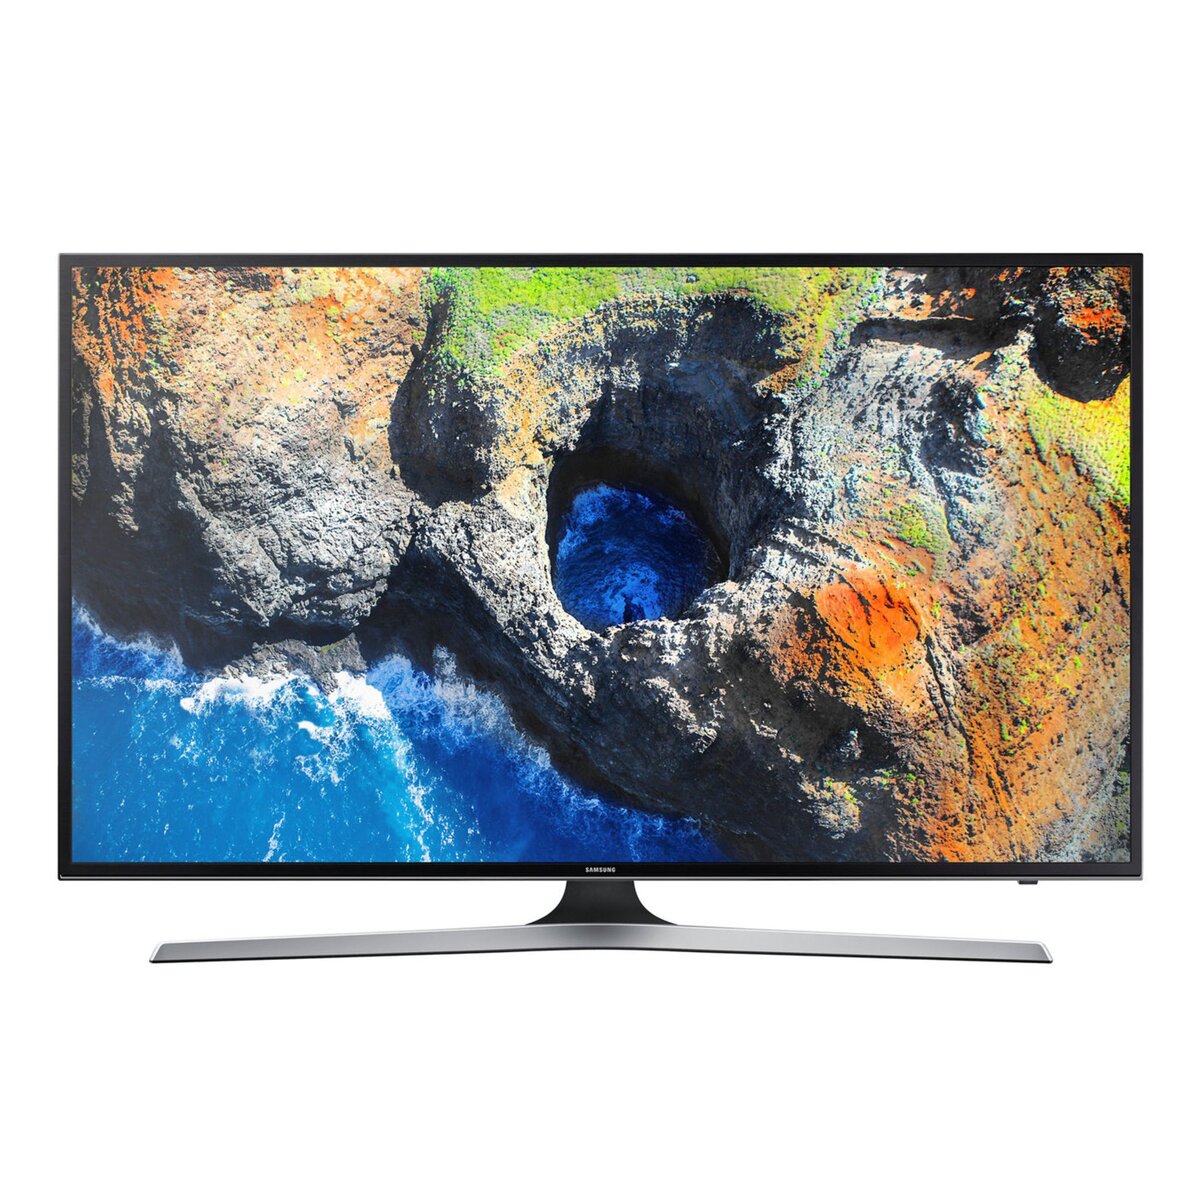 SAMSUNG UE49MU6105 - TV - LED - Ultra HD - 123 cm - Smart TV